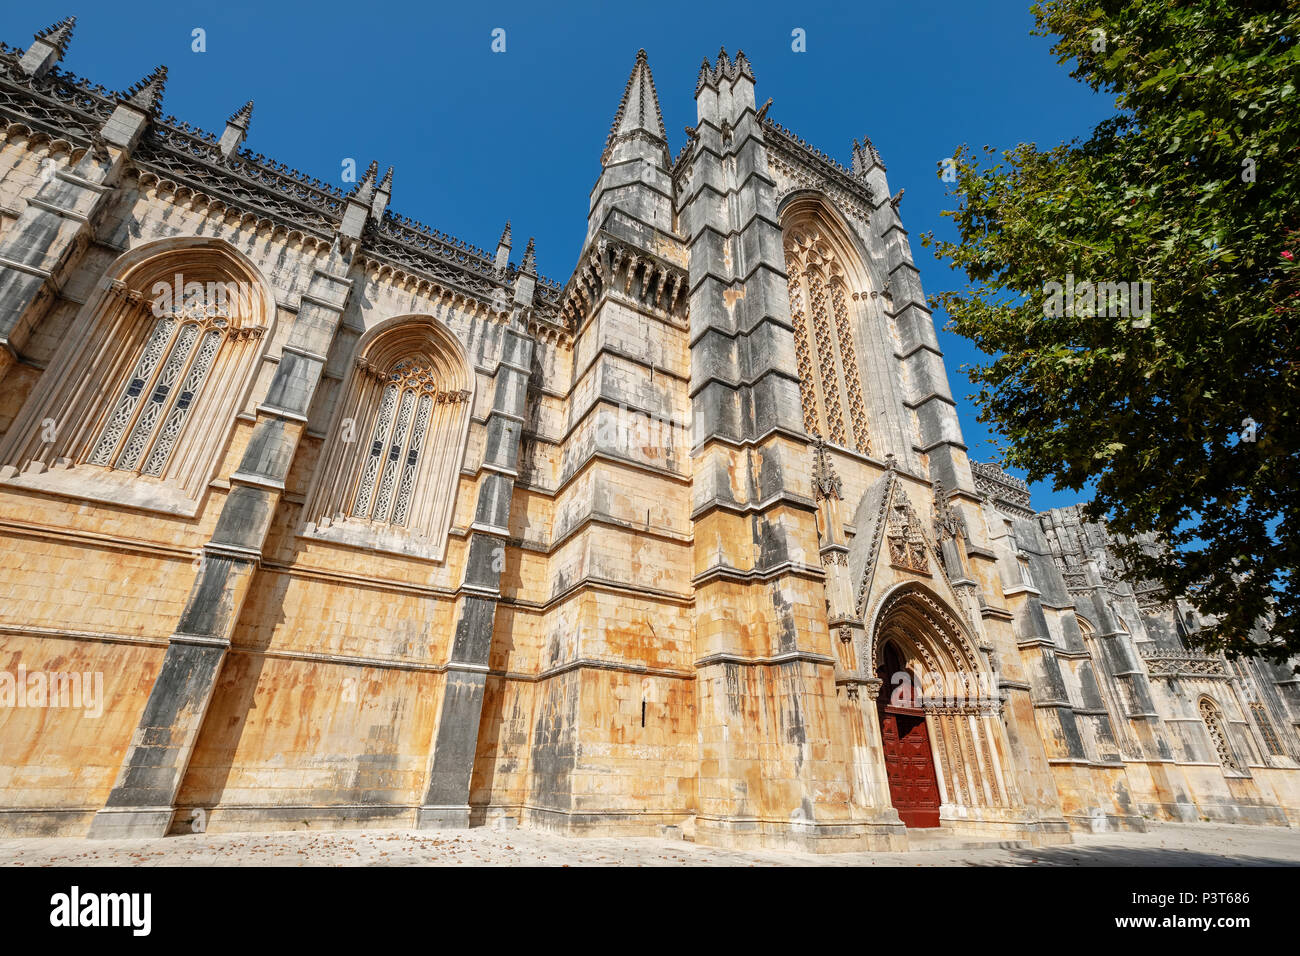 View of the monastery Santa Maria da Vitoria in Batalha. Central Portugal, Europe Stock Photo